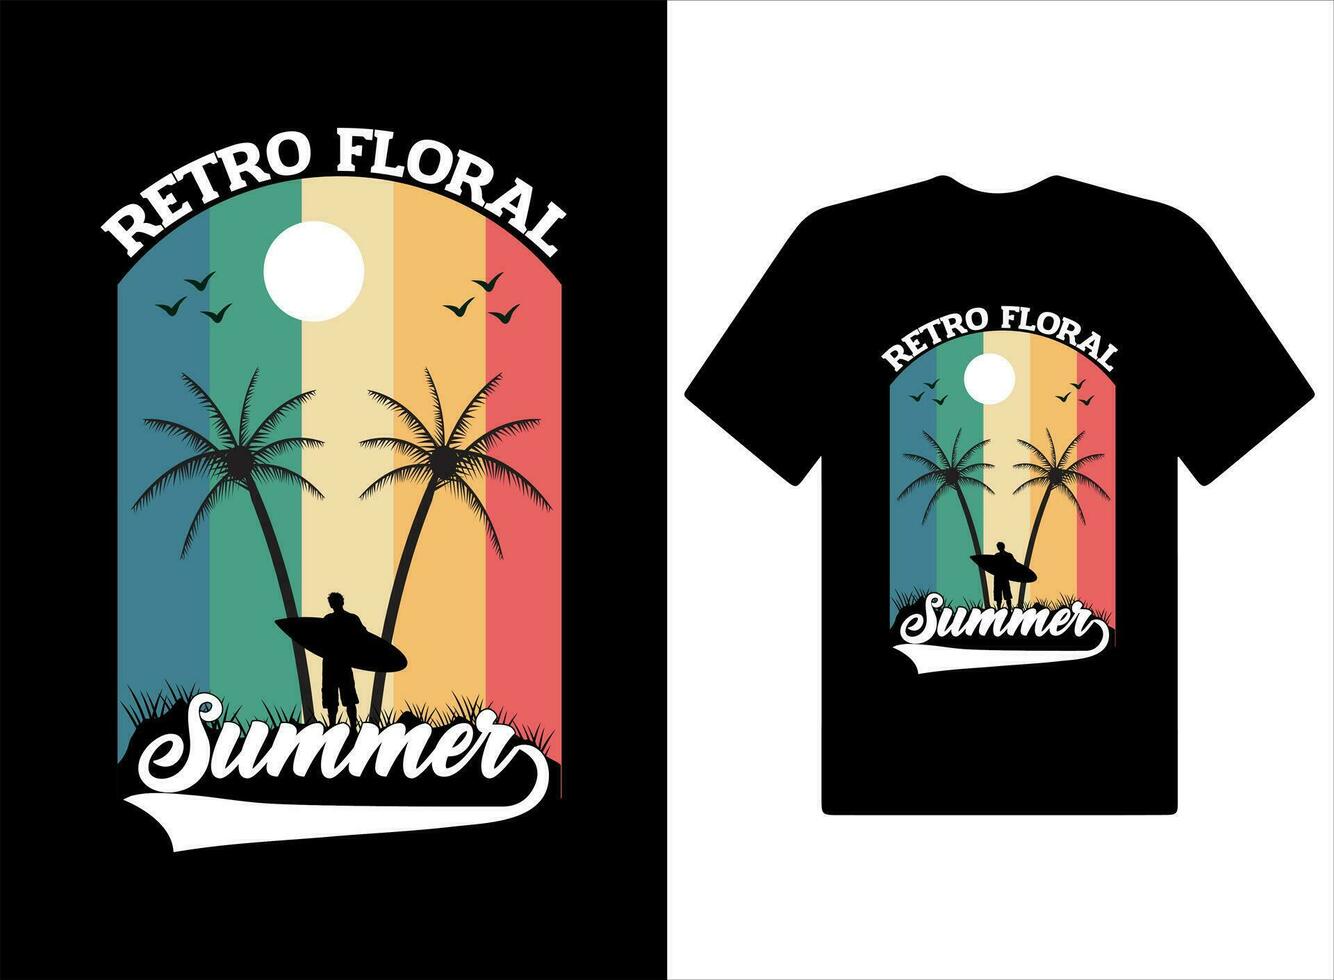 Enjoy the summer t-shirts Design vintage summer illustration and vector Pro Vector